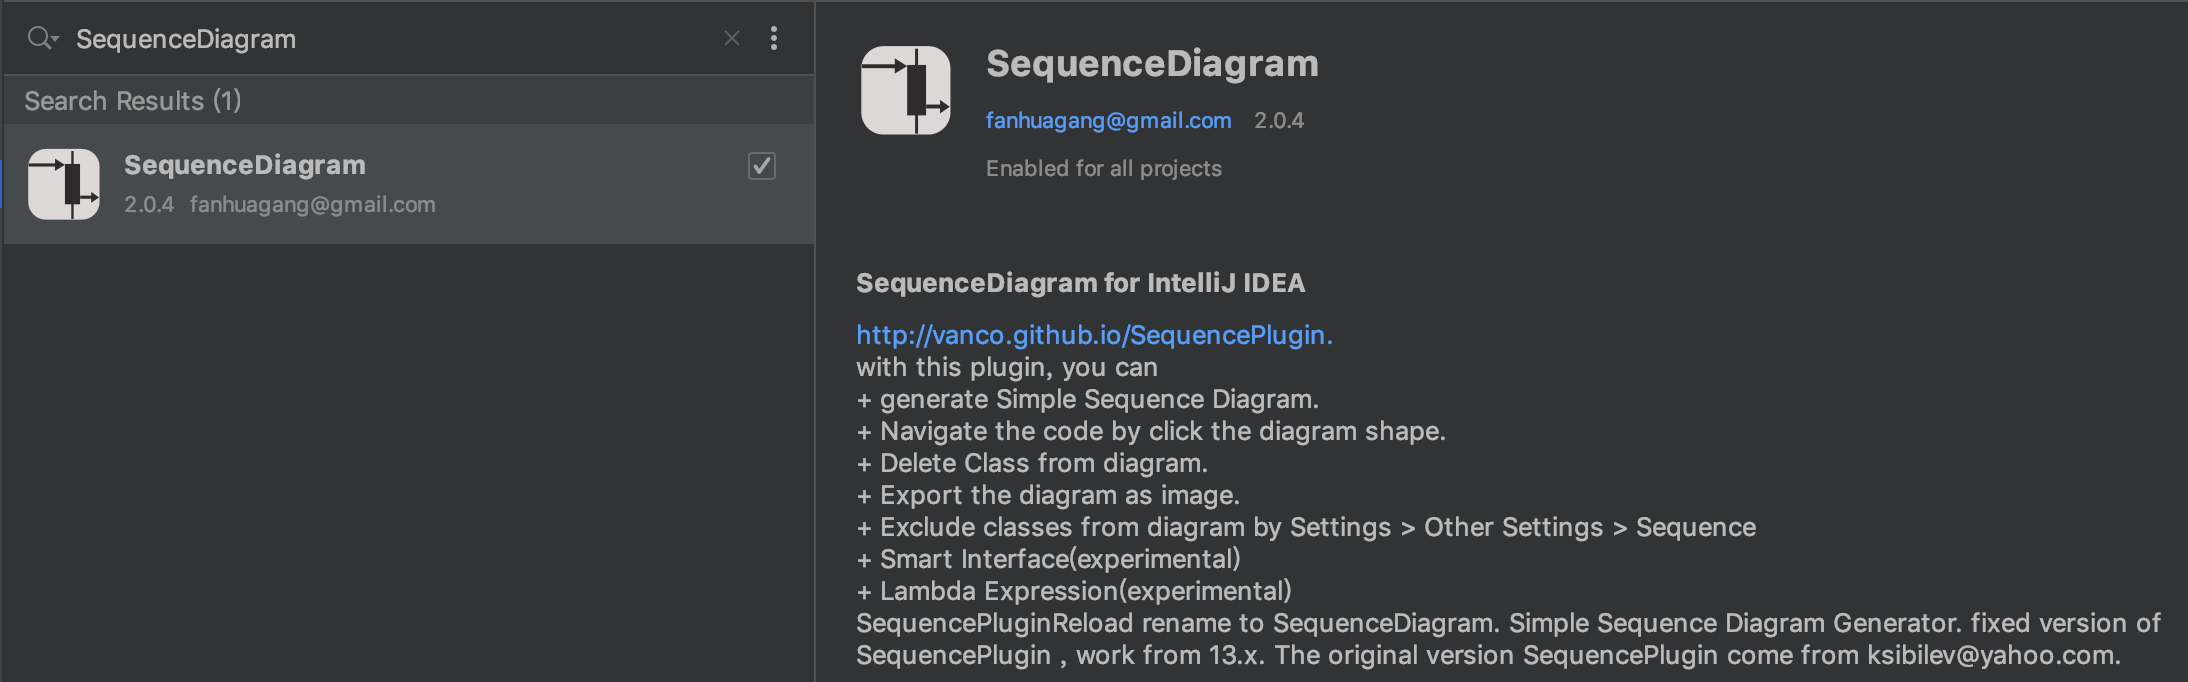 SequenceDiagram